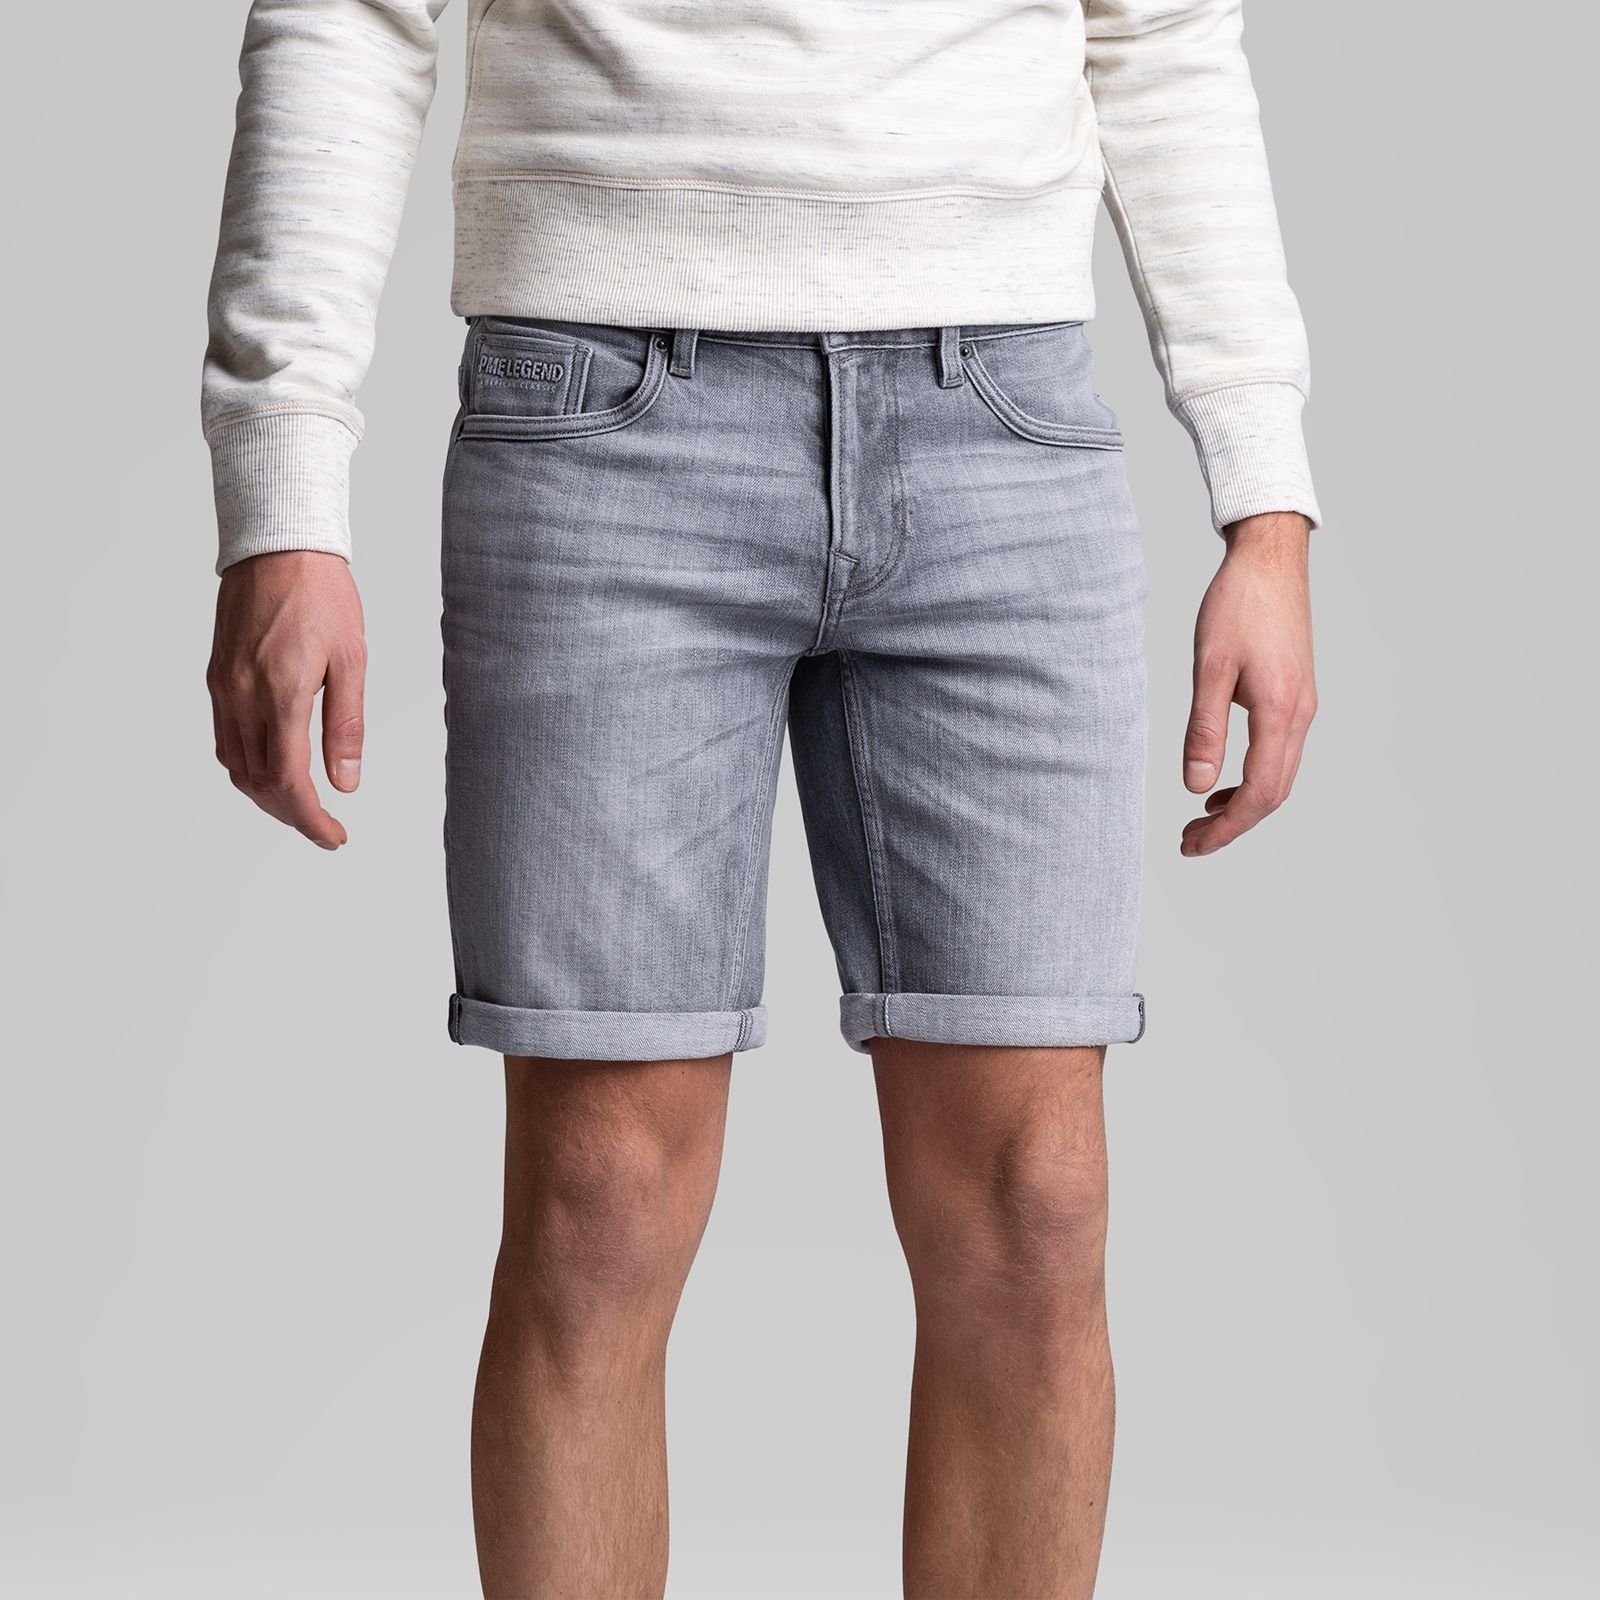 LEGEND grey denim Shorts PME